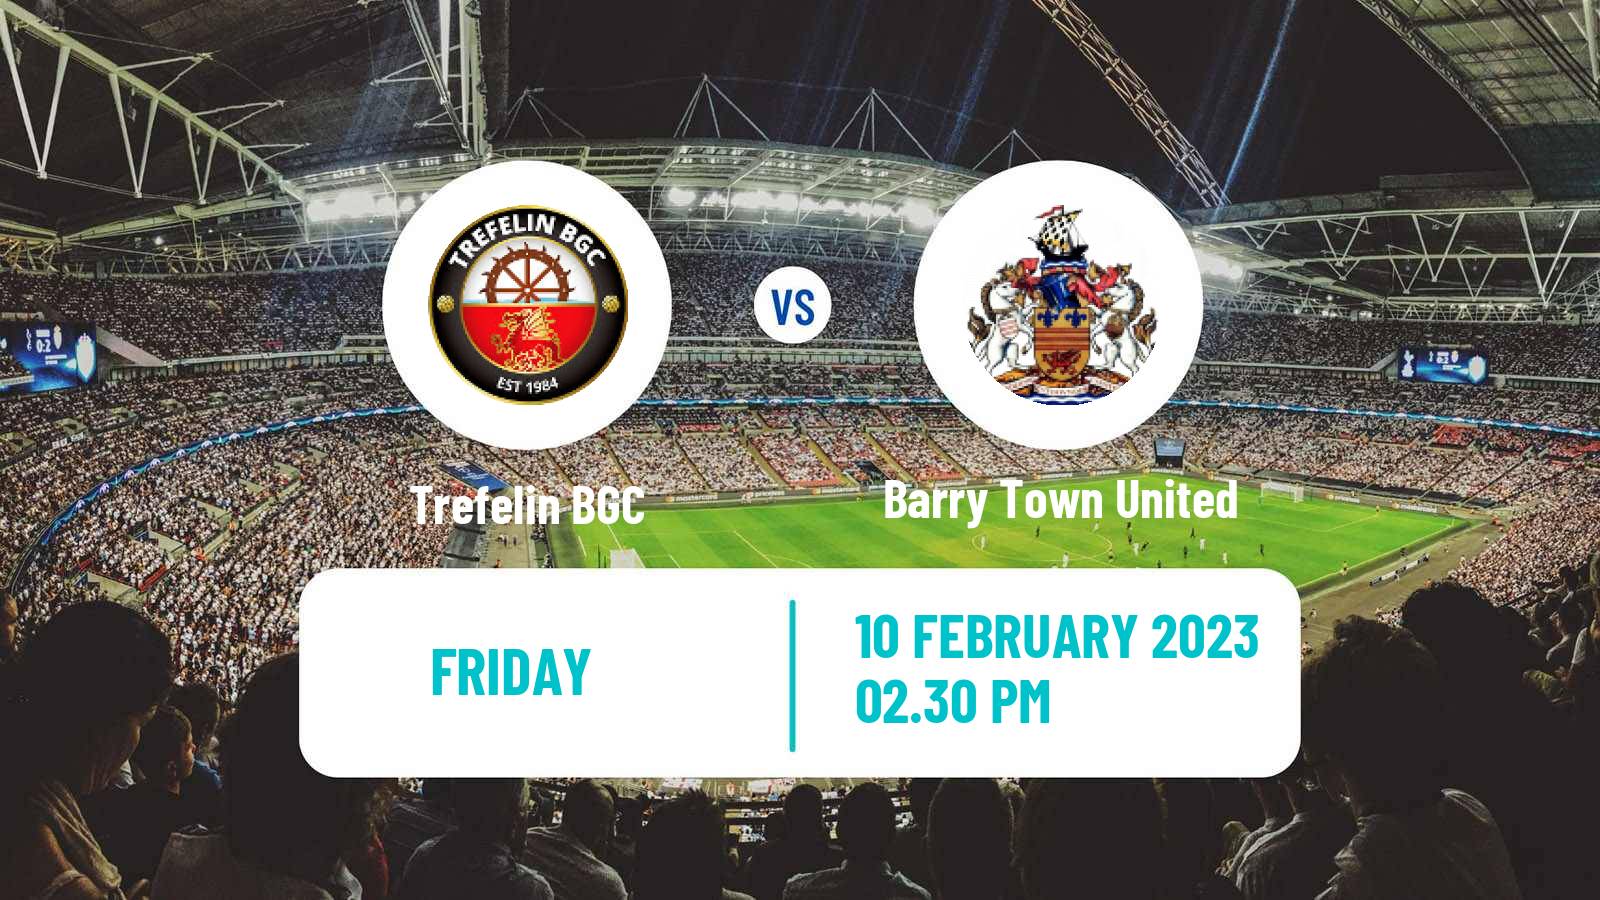 Soccer Welsh Cymru South Trefelin - Barry Town United